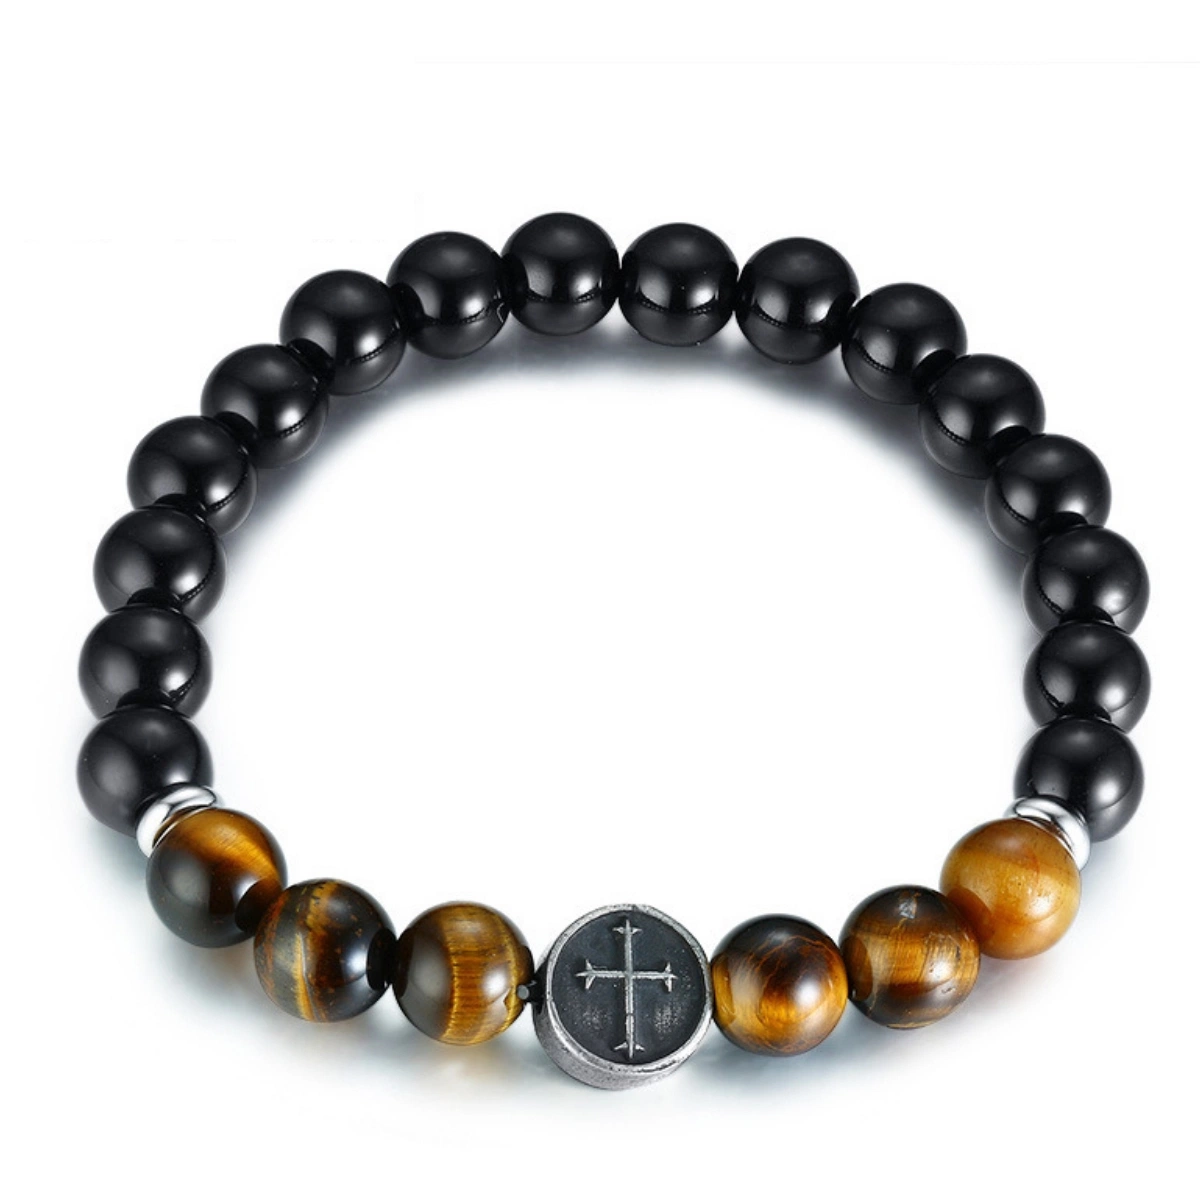 16.5 Cm Titanium Steel Accessories Tiger Eye Stone Black Agate String Beads Bracelet Men's Cross Bracelet